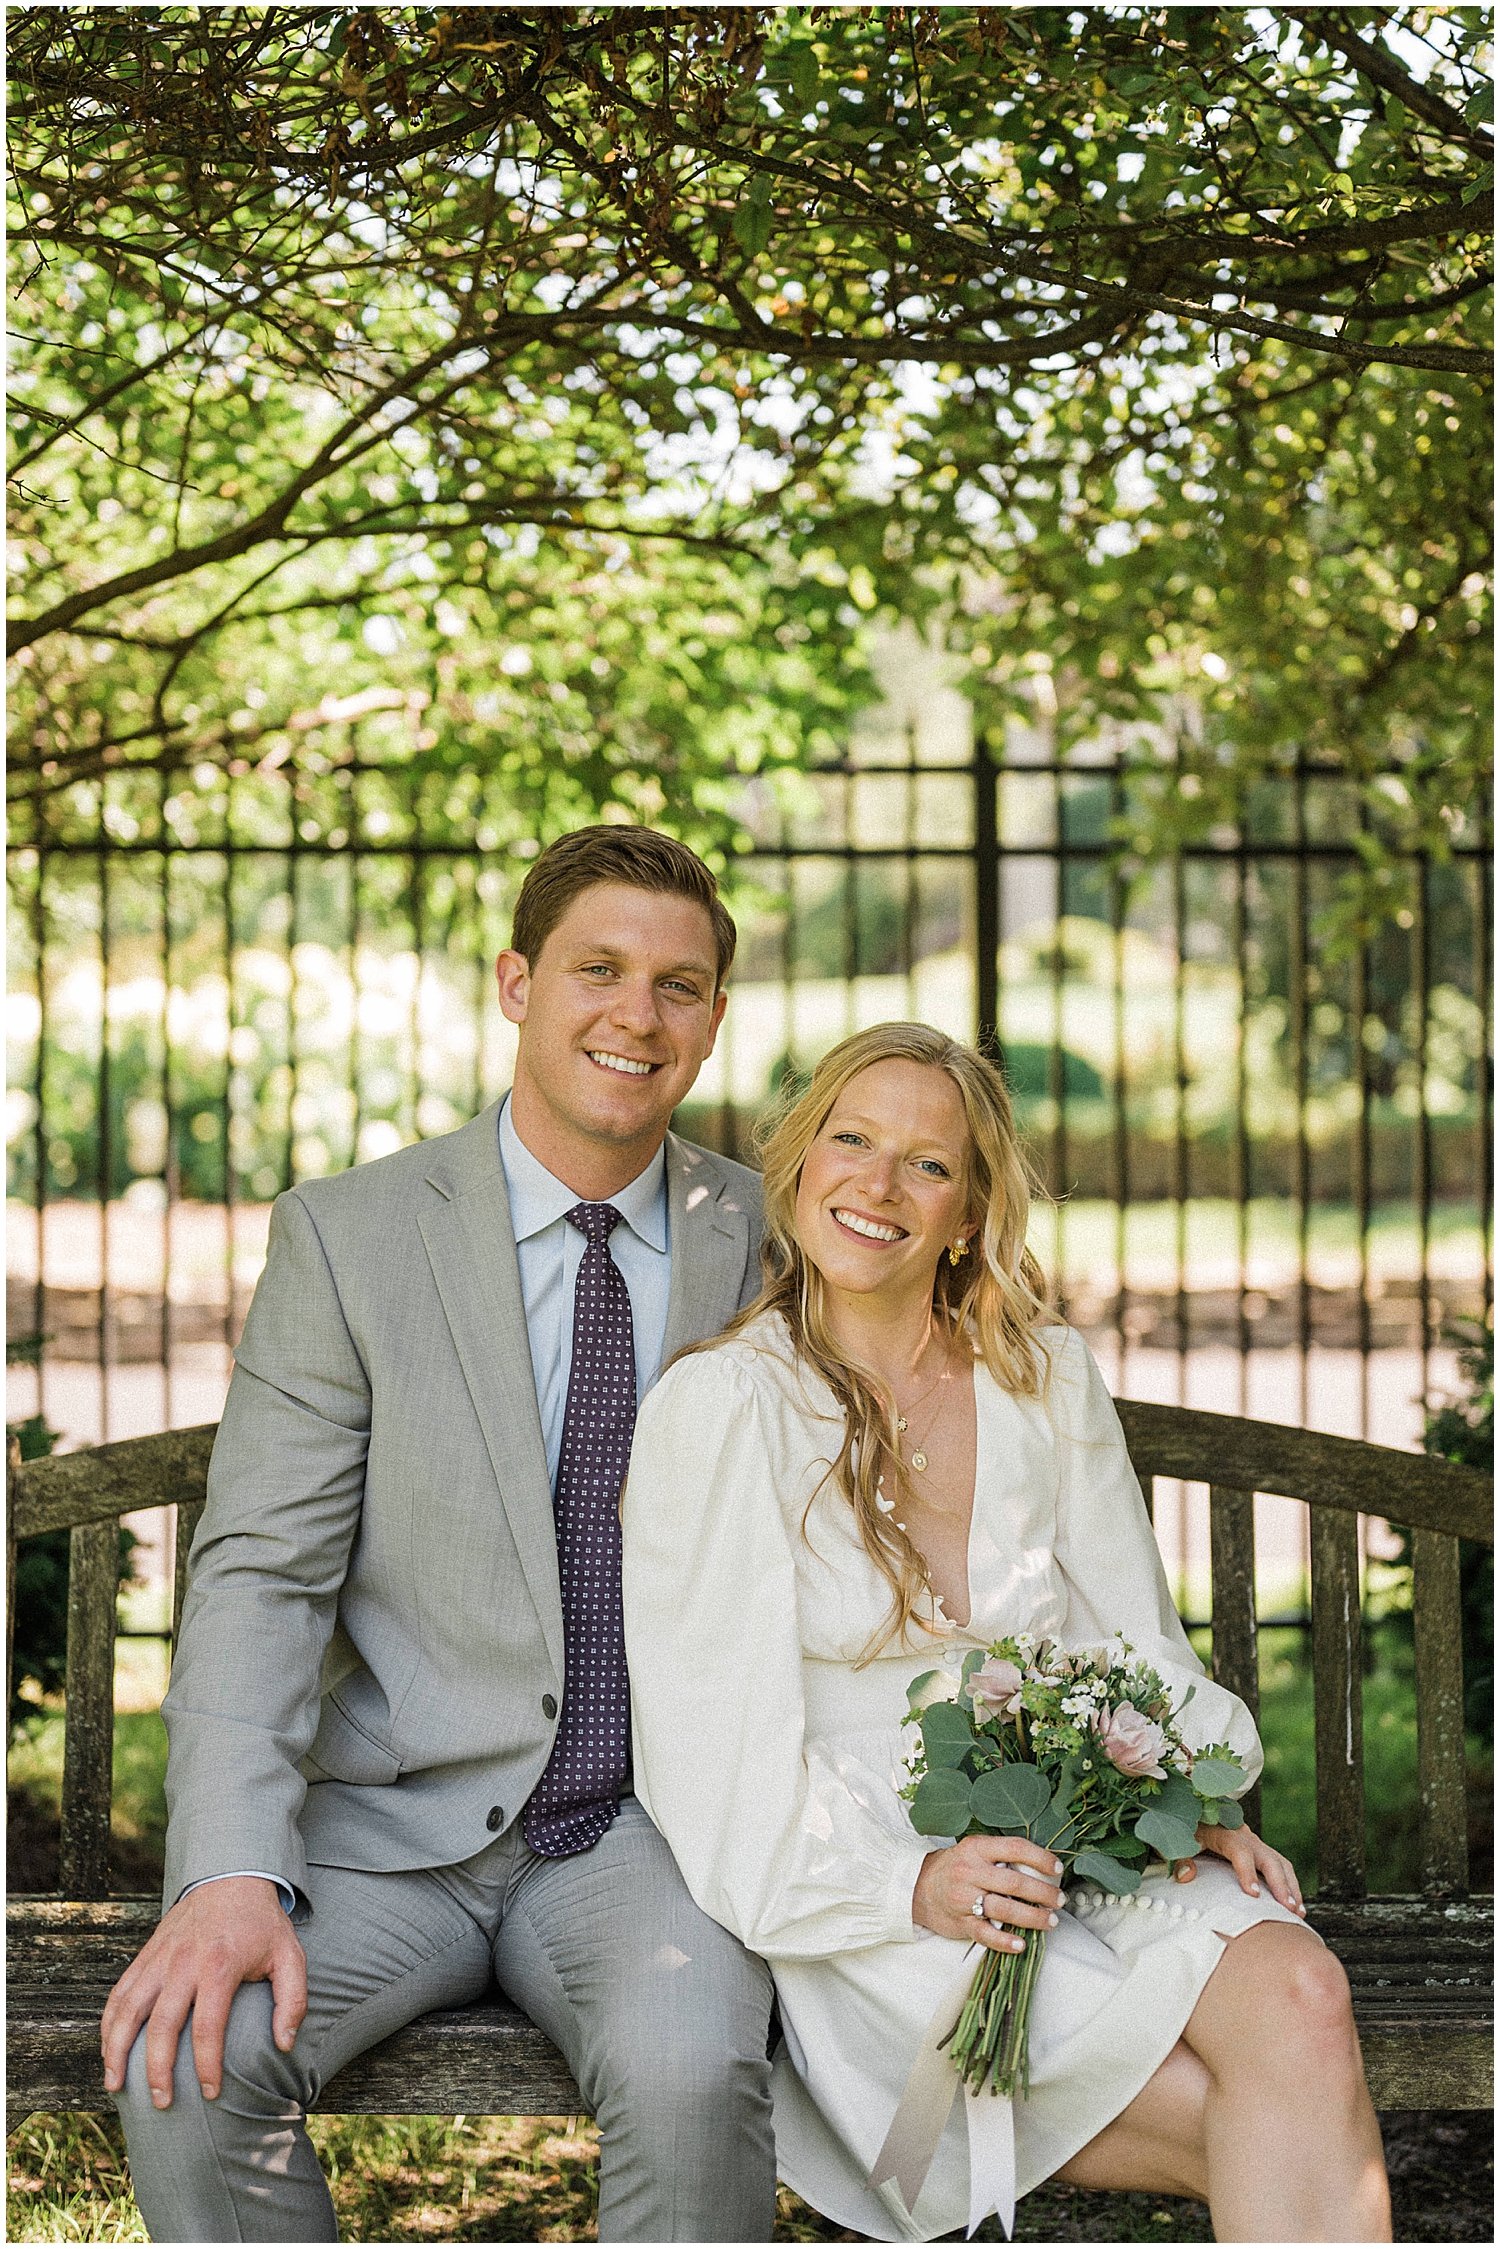 Smith Gardens Wedding Portraits | Dayton, Ohio